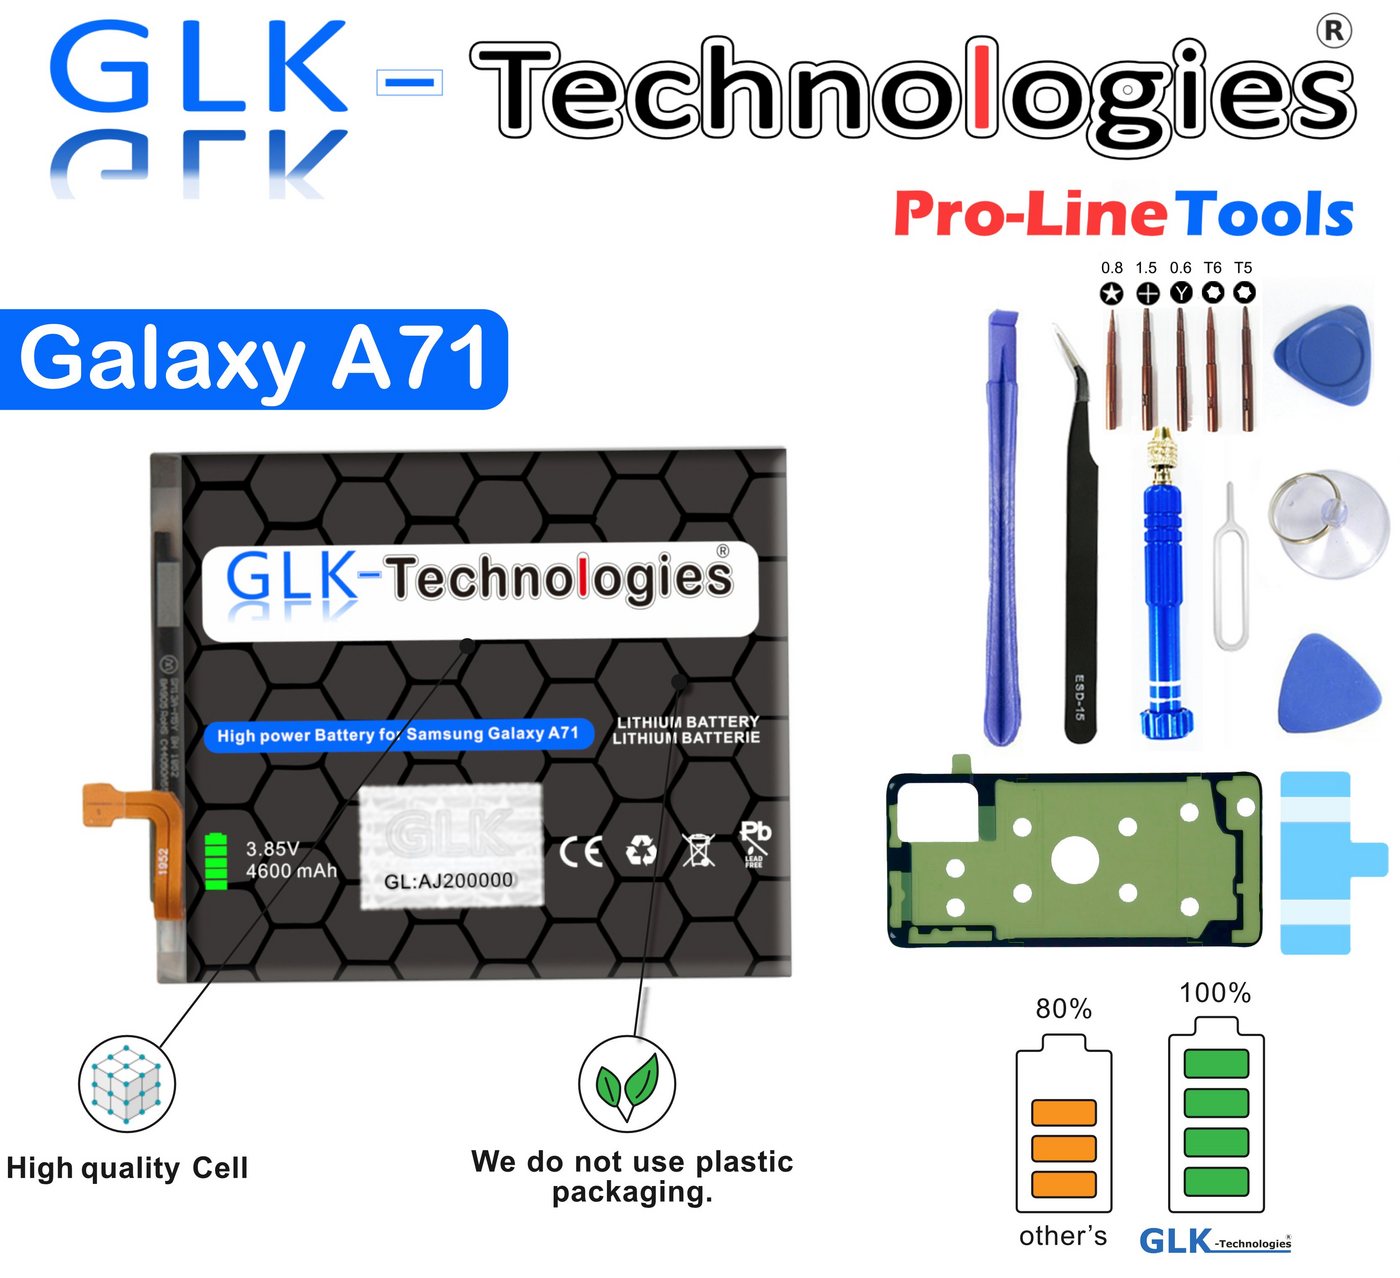 GLK-Technologies High Power Ersatzakku kompatibel mit Original Akku für Samsung Galaxy A71 SM-A715F, Profi-Set, EB-BA715ABY Batterie GLK-Technologies inkl. Werkzeug Set Kit Handy-Akku 4600 mAh (3.85 V) von GLK-Technologies